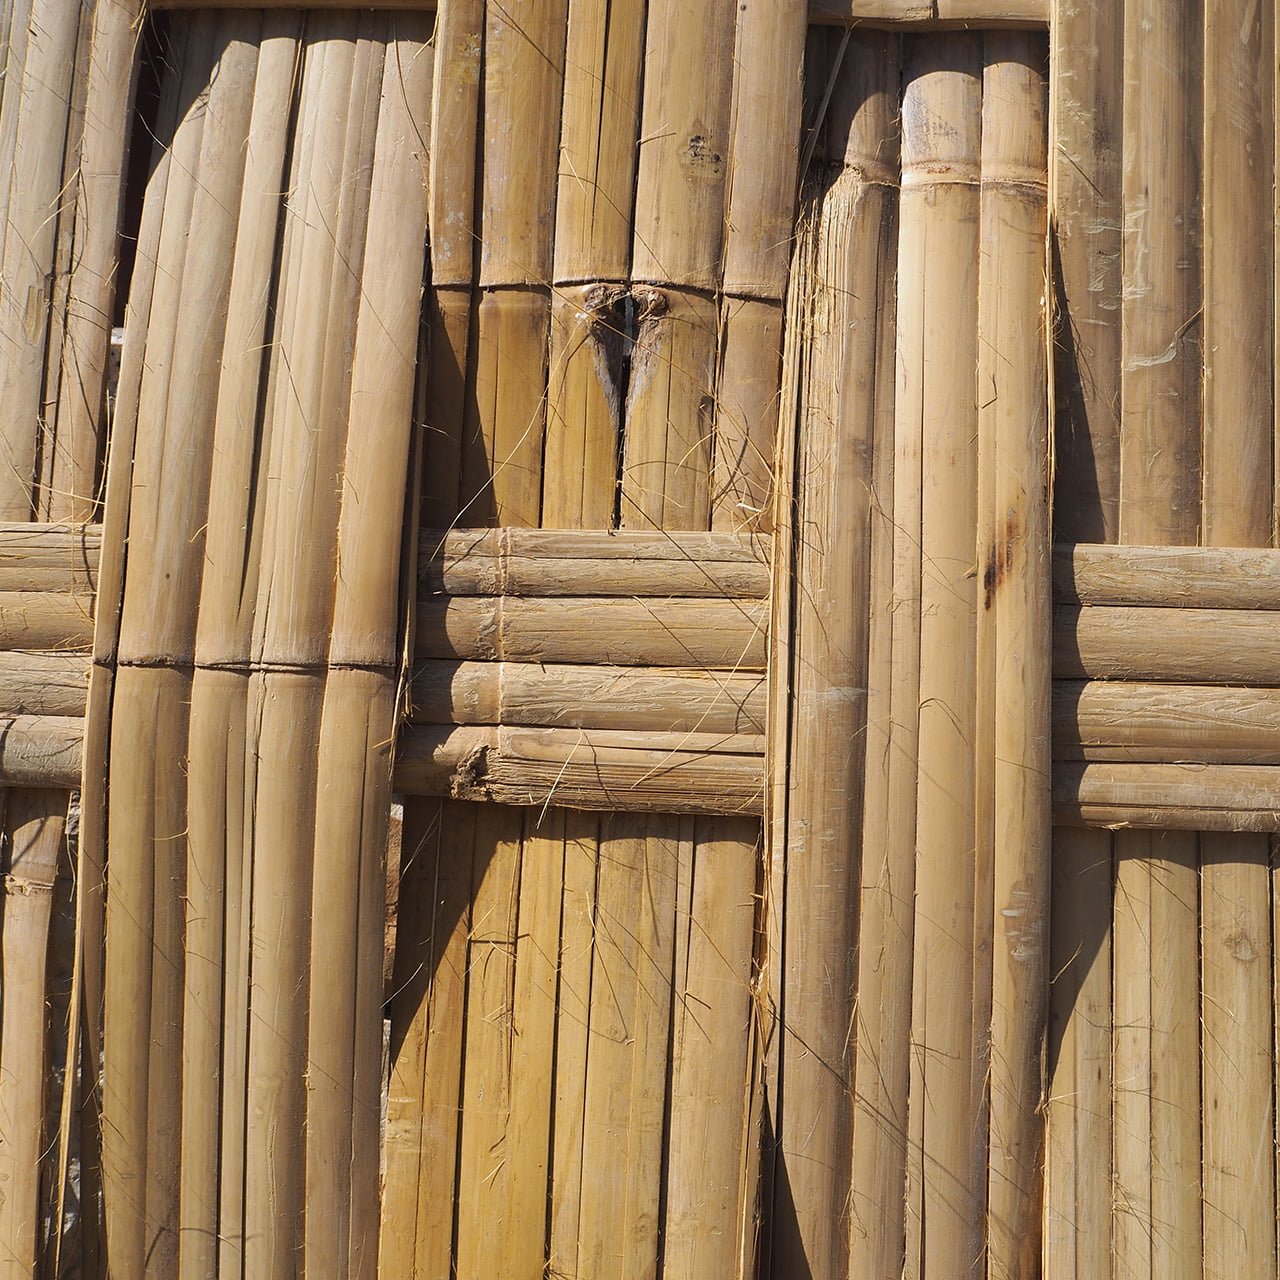 Canne di bambu per massaggio